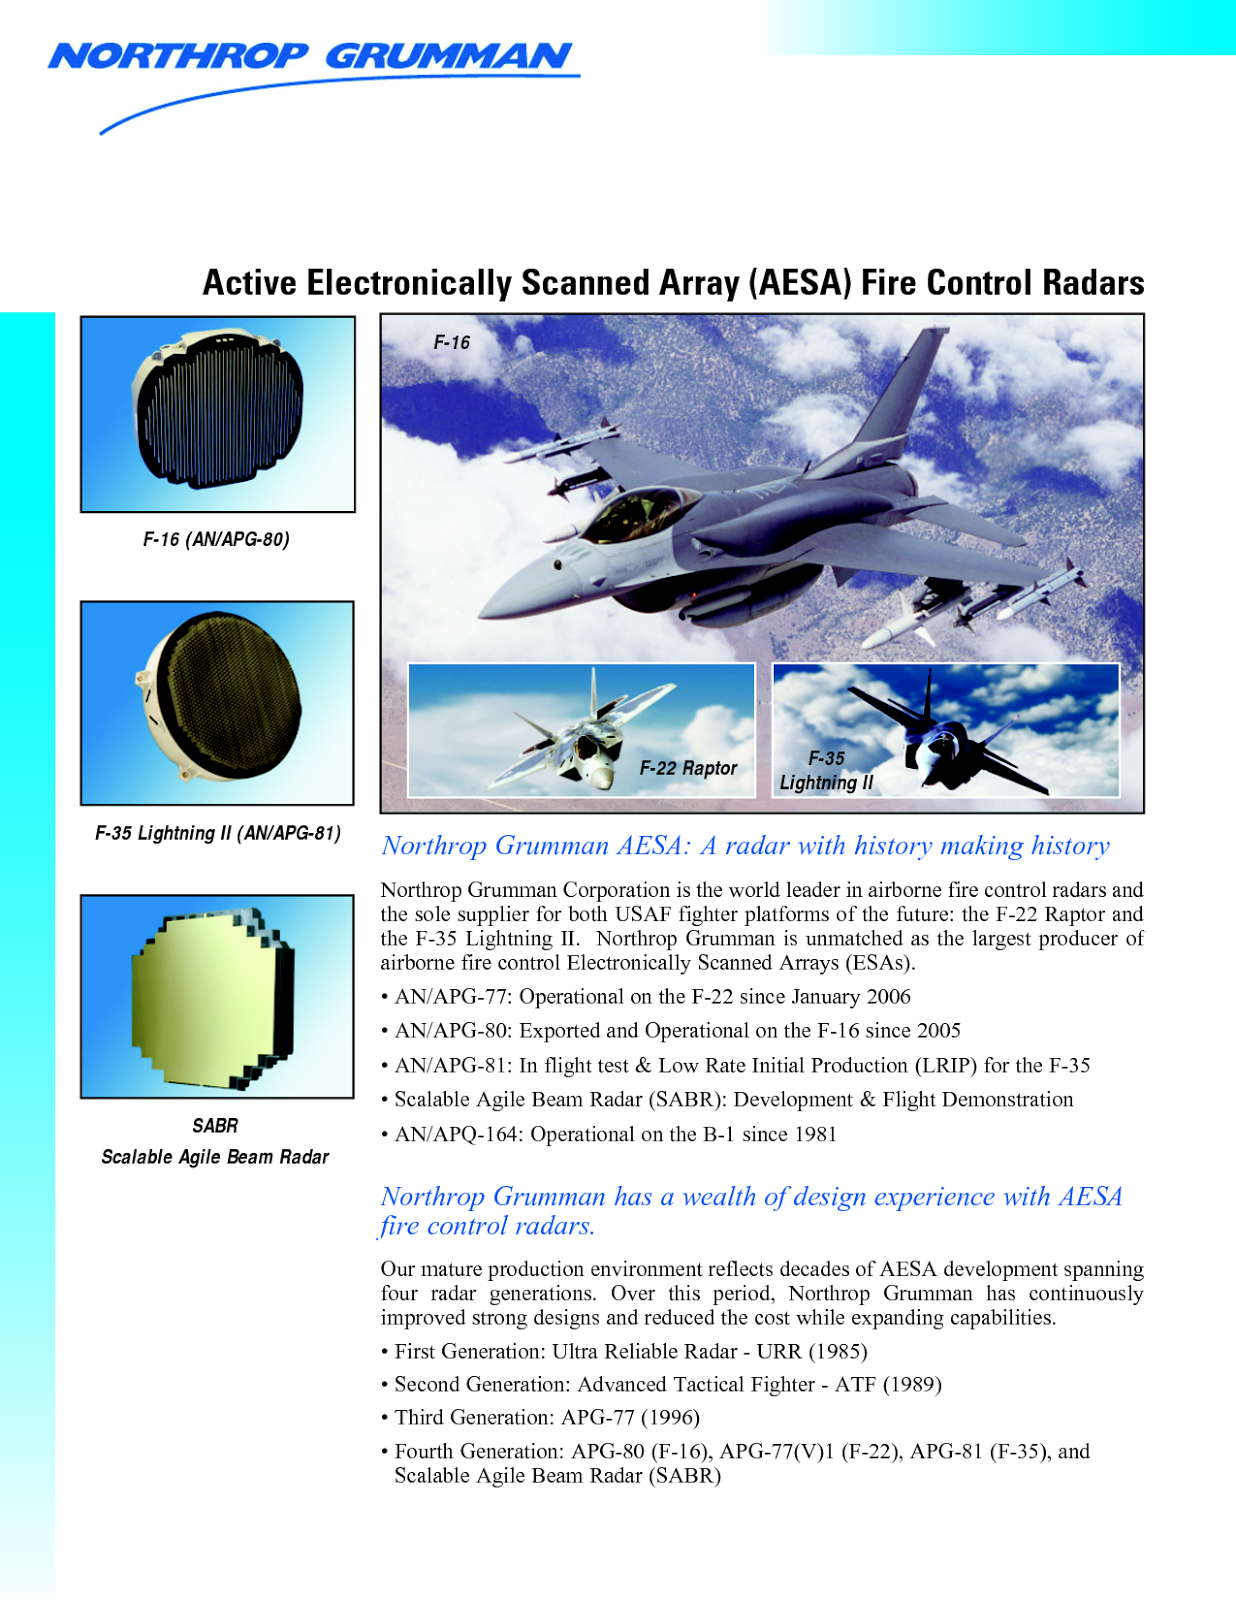 Northrop+Grumman%2527s+Scalable+Agile+Beam+Radar+%2528SABR%2529+Wins+USAF%2527s+F-16+AESA+Radar+Contract+%25281%2529.png